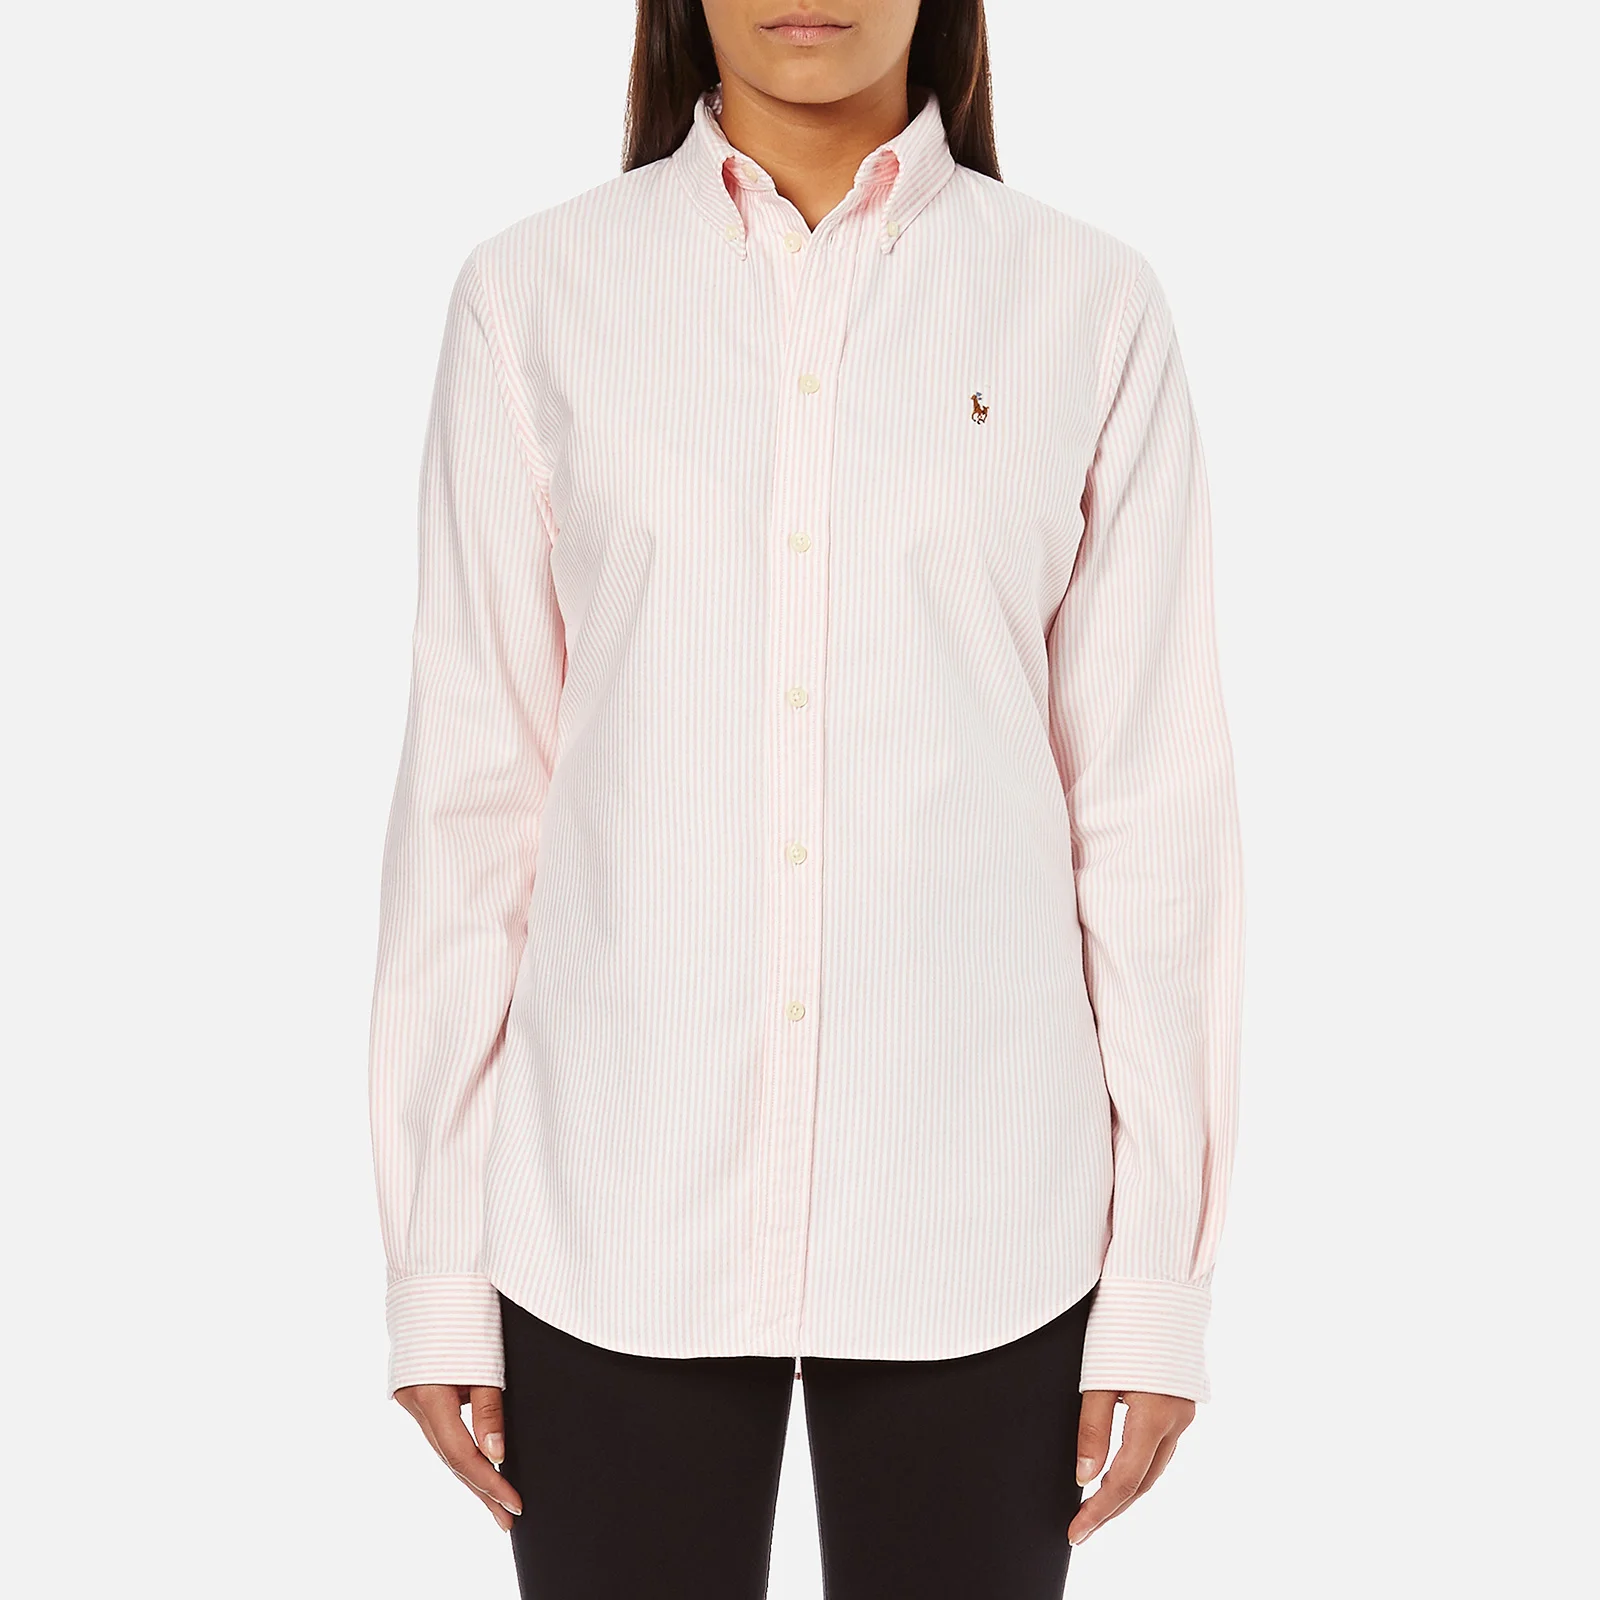 Polo Ralph Lauren Women's Harper Shirt - Pink/White Image 1